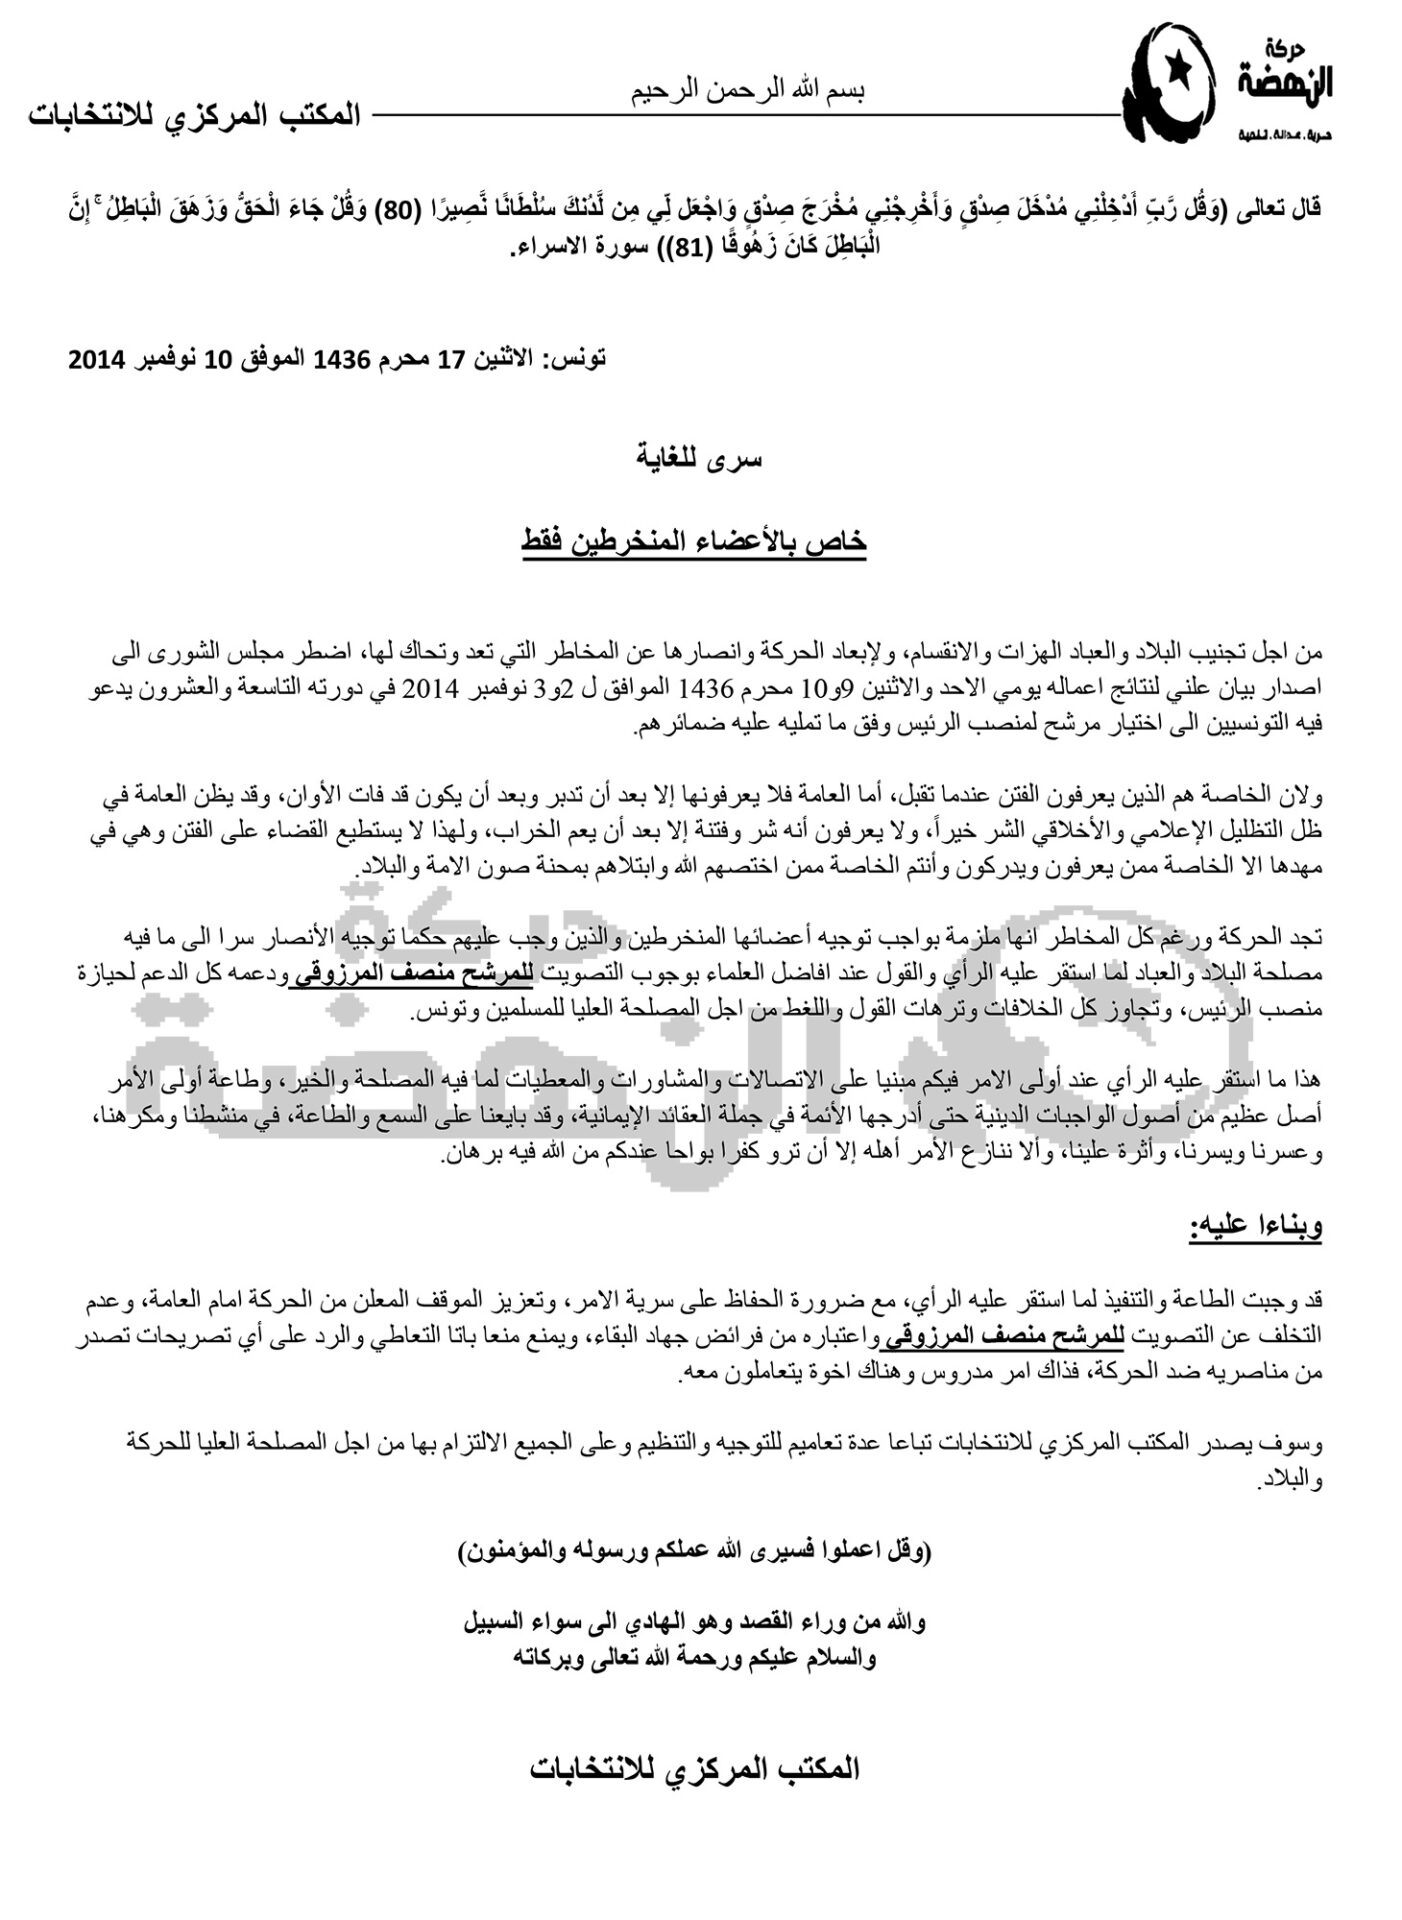 20141117-version-arabe-circulaire-annahda-elections